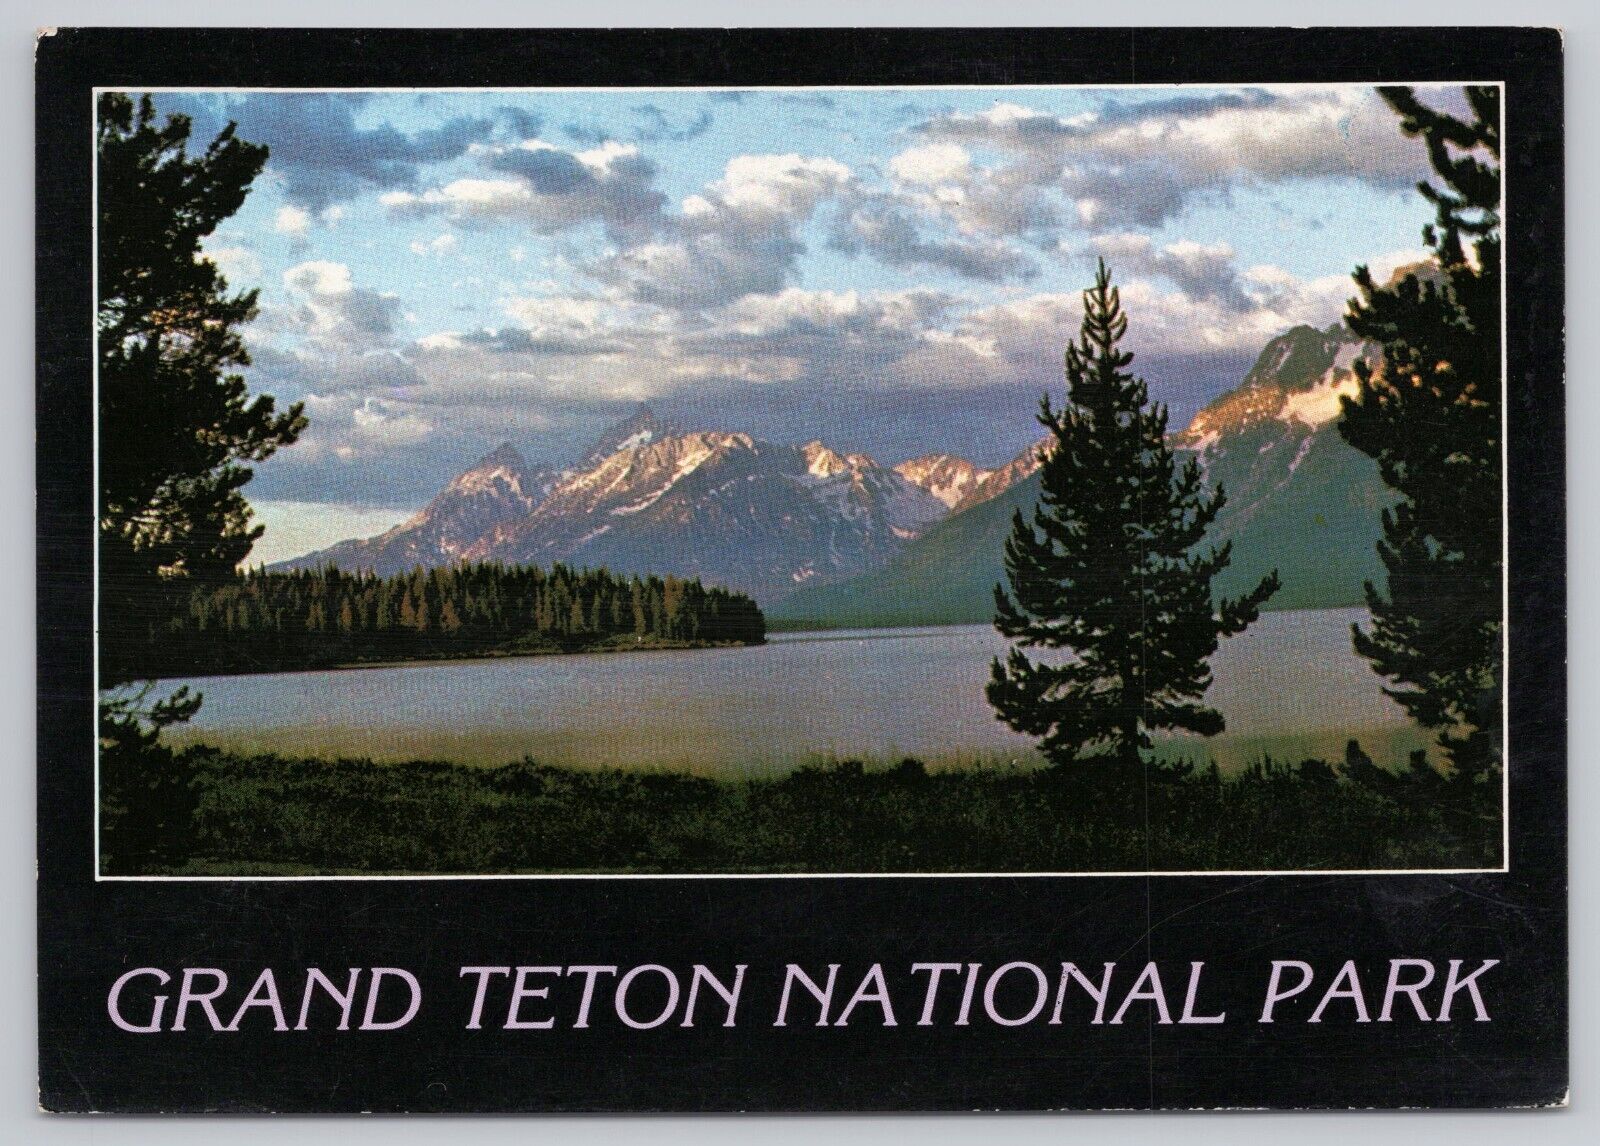 Grand Teton National Park Wyoming, Mountain Tableau Scenic View Vintage Postcard